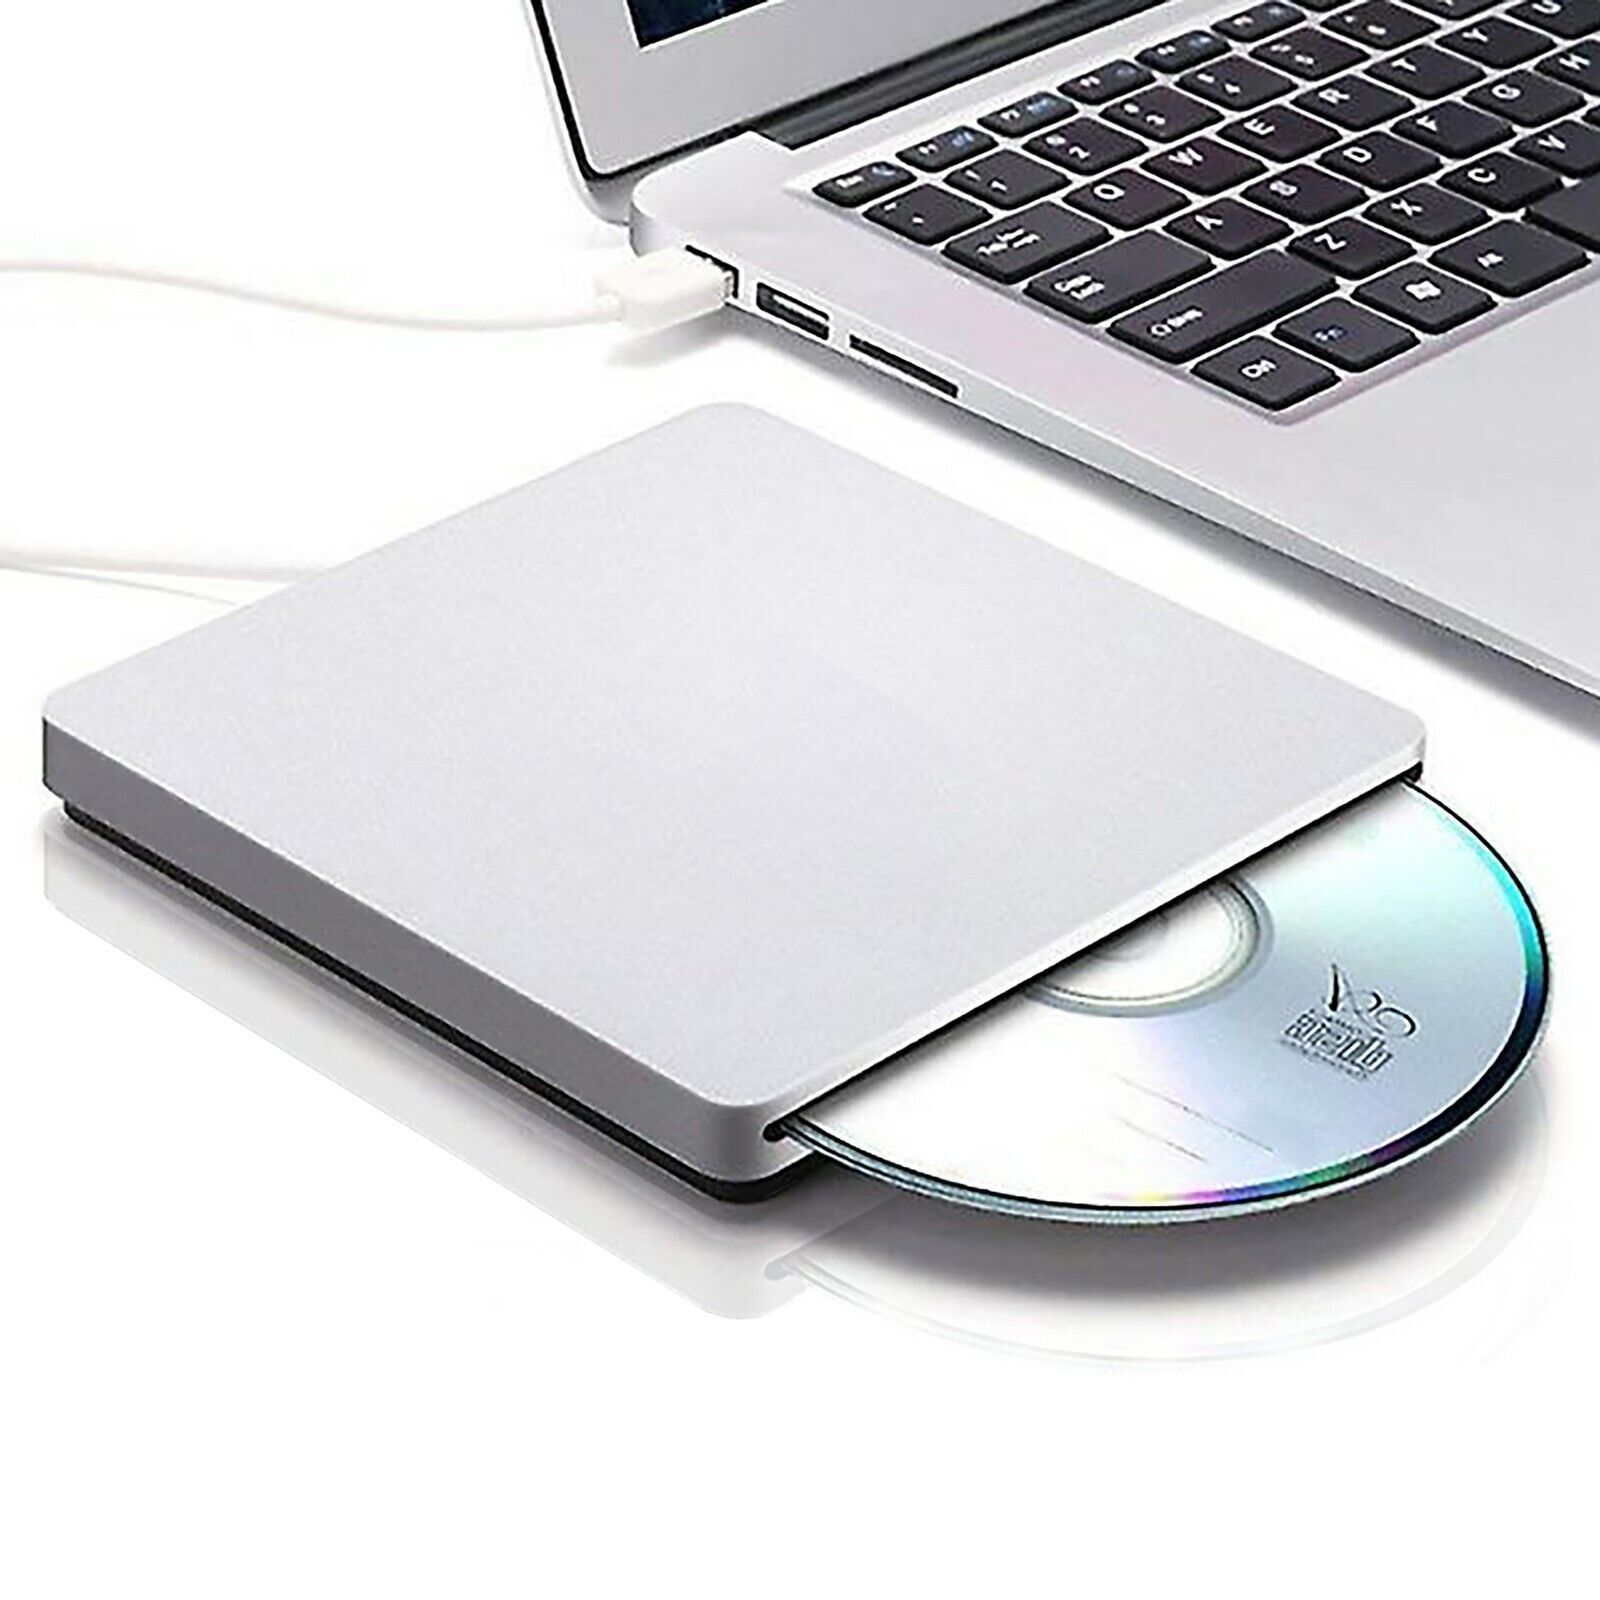 ULTRA SLIM External CD DVD Writer Burner Reader Player Slot Drive PC Apple Mac